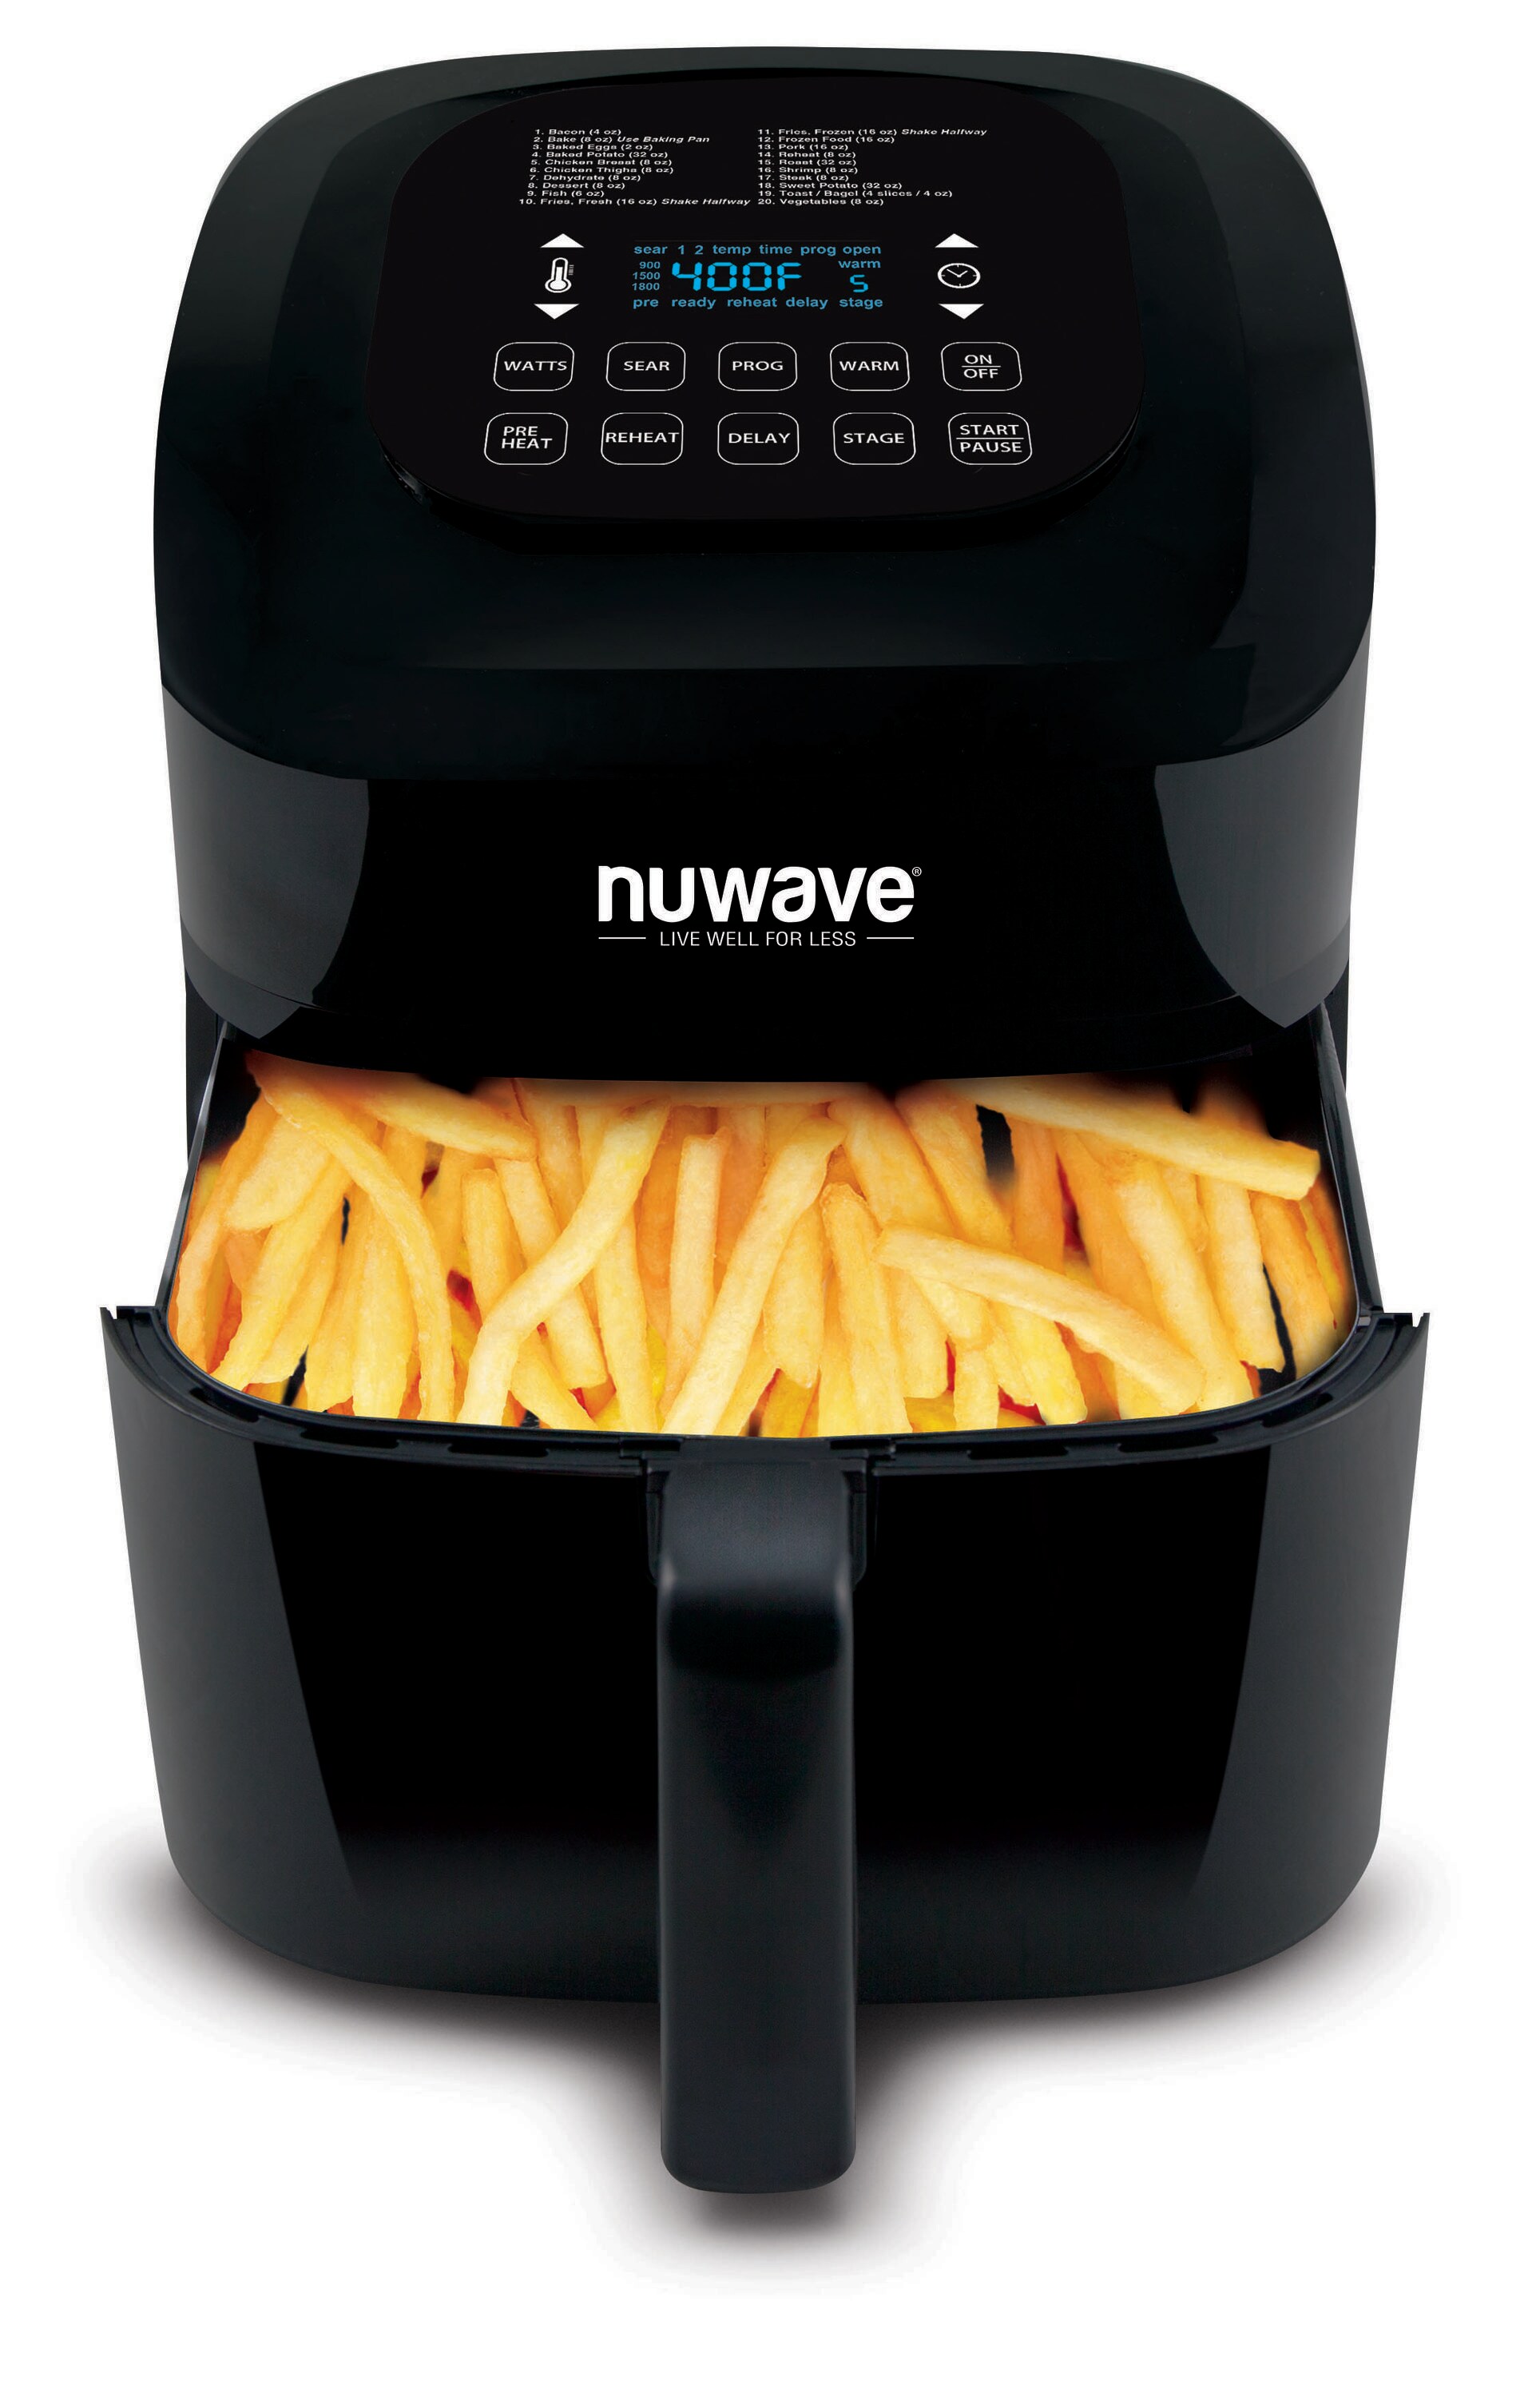 NuWave 3-Quart Black Air Fryer at